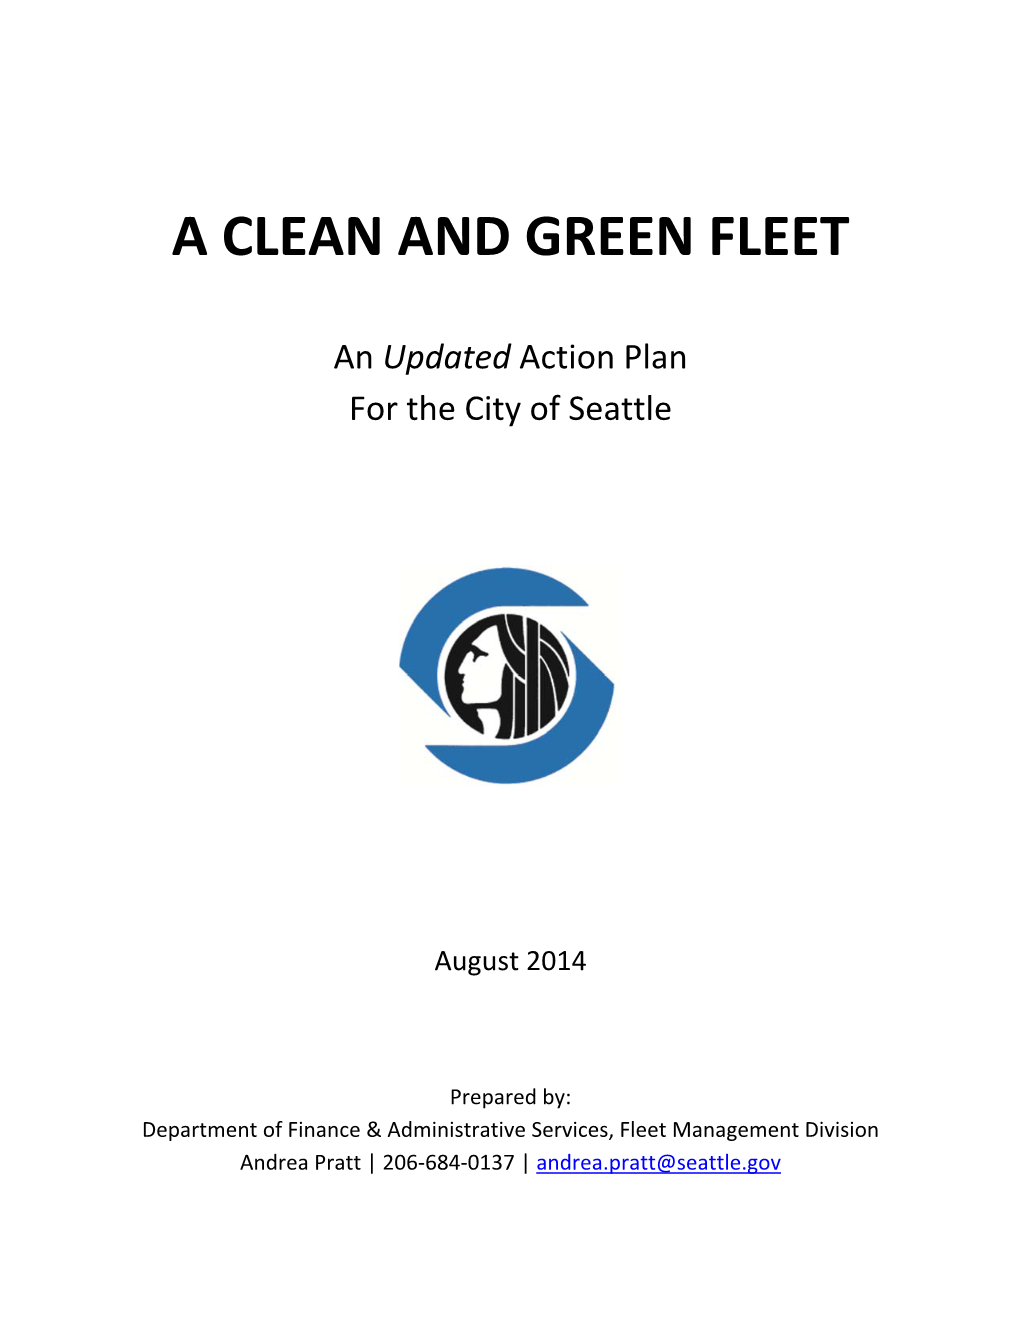 A Clean and Green Fleet